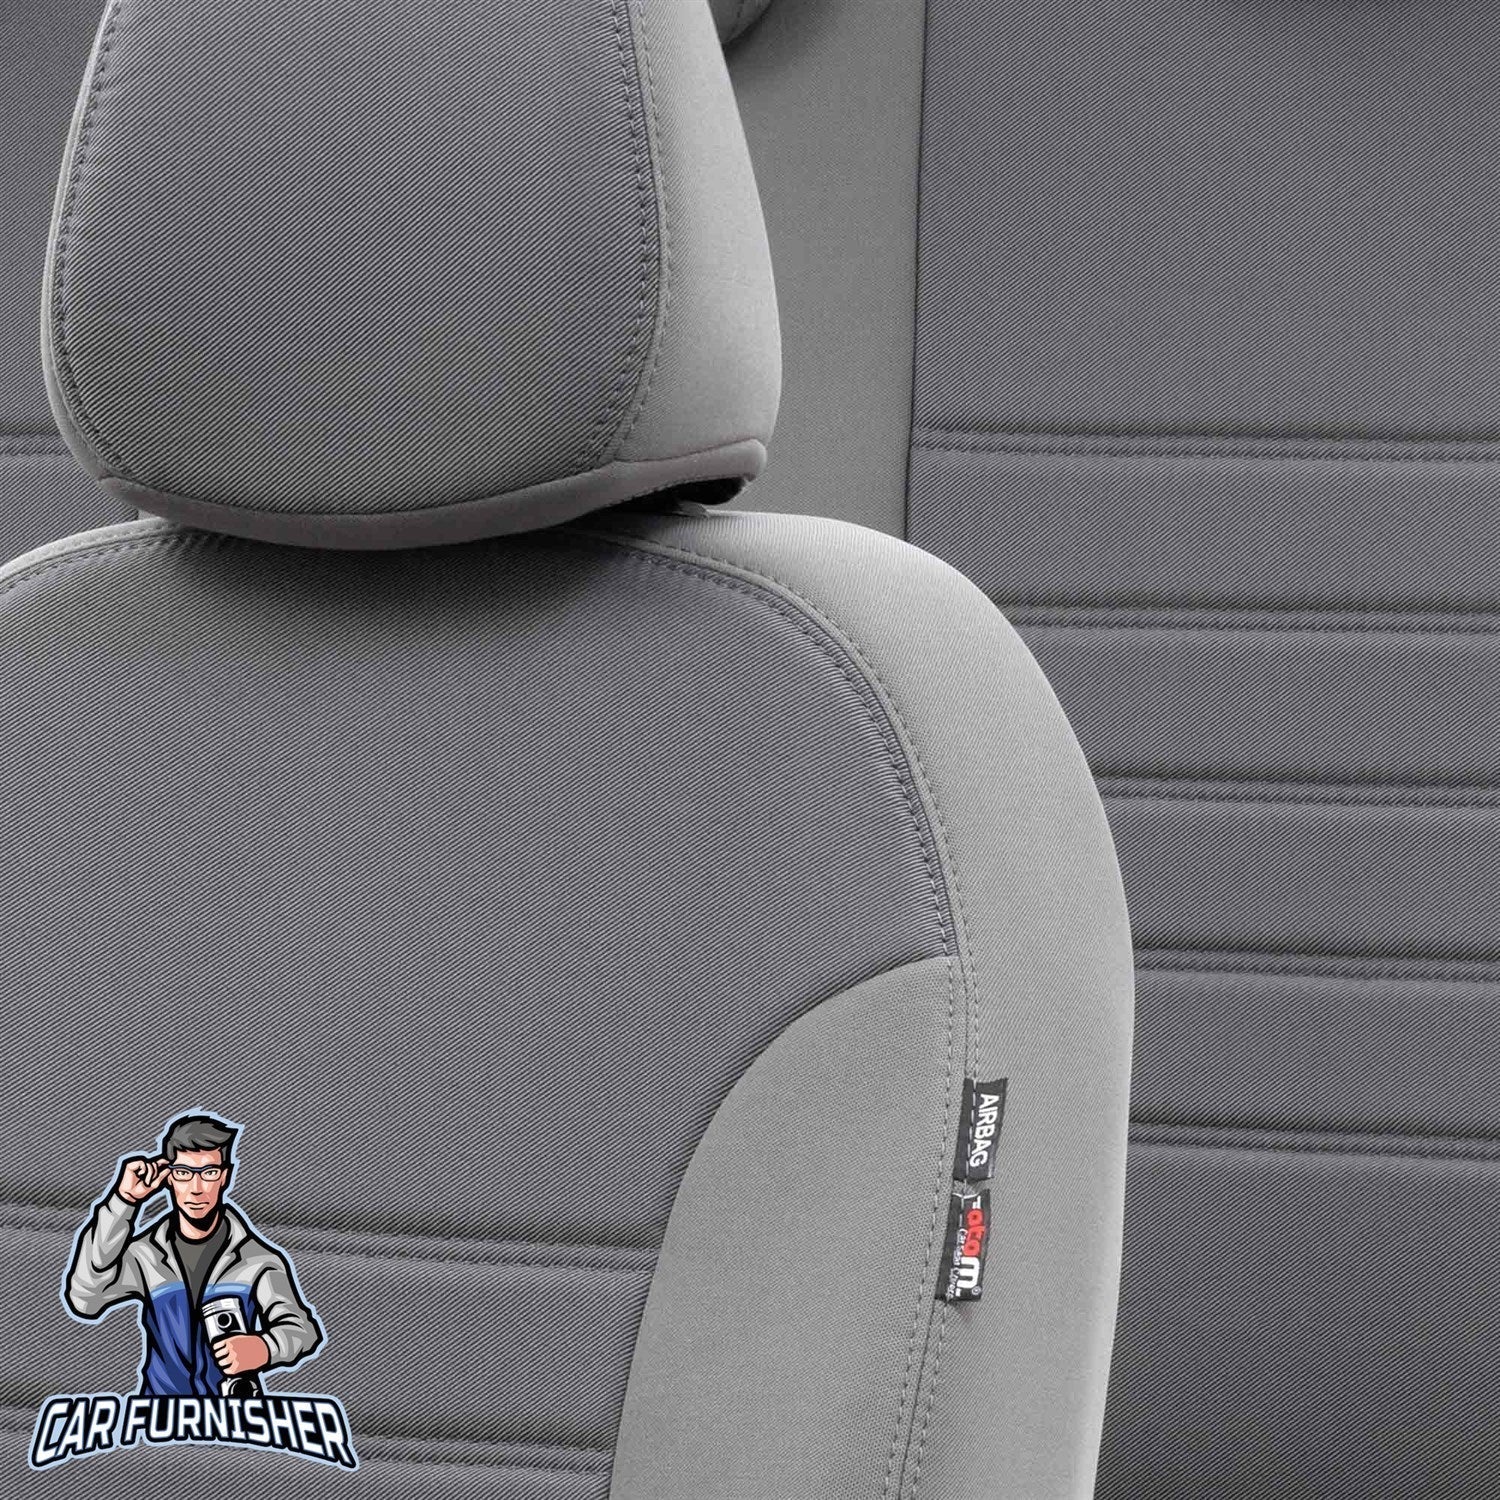 Skoda Roomstar Seat Cover Original Jacquard Design Gray Jacquard Fabric